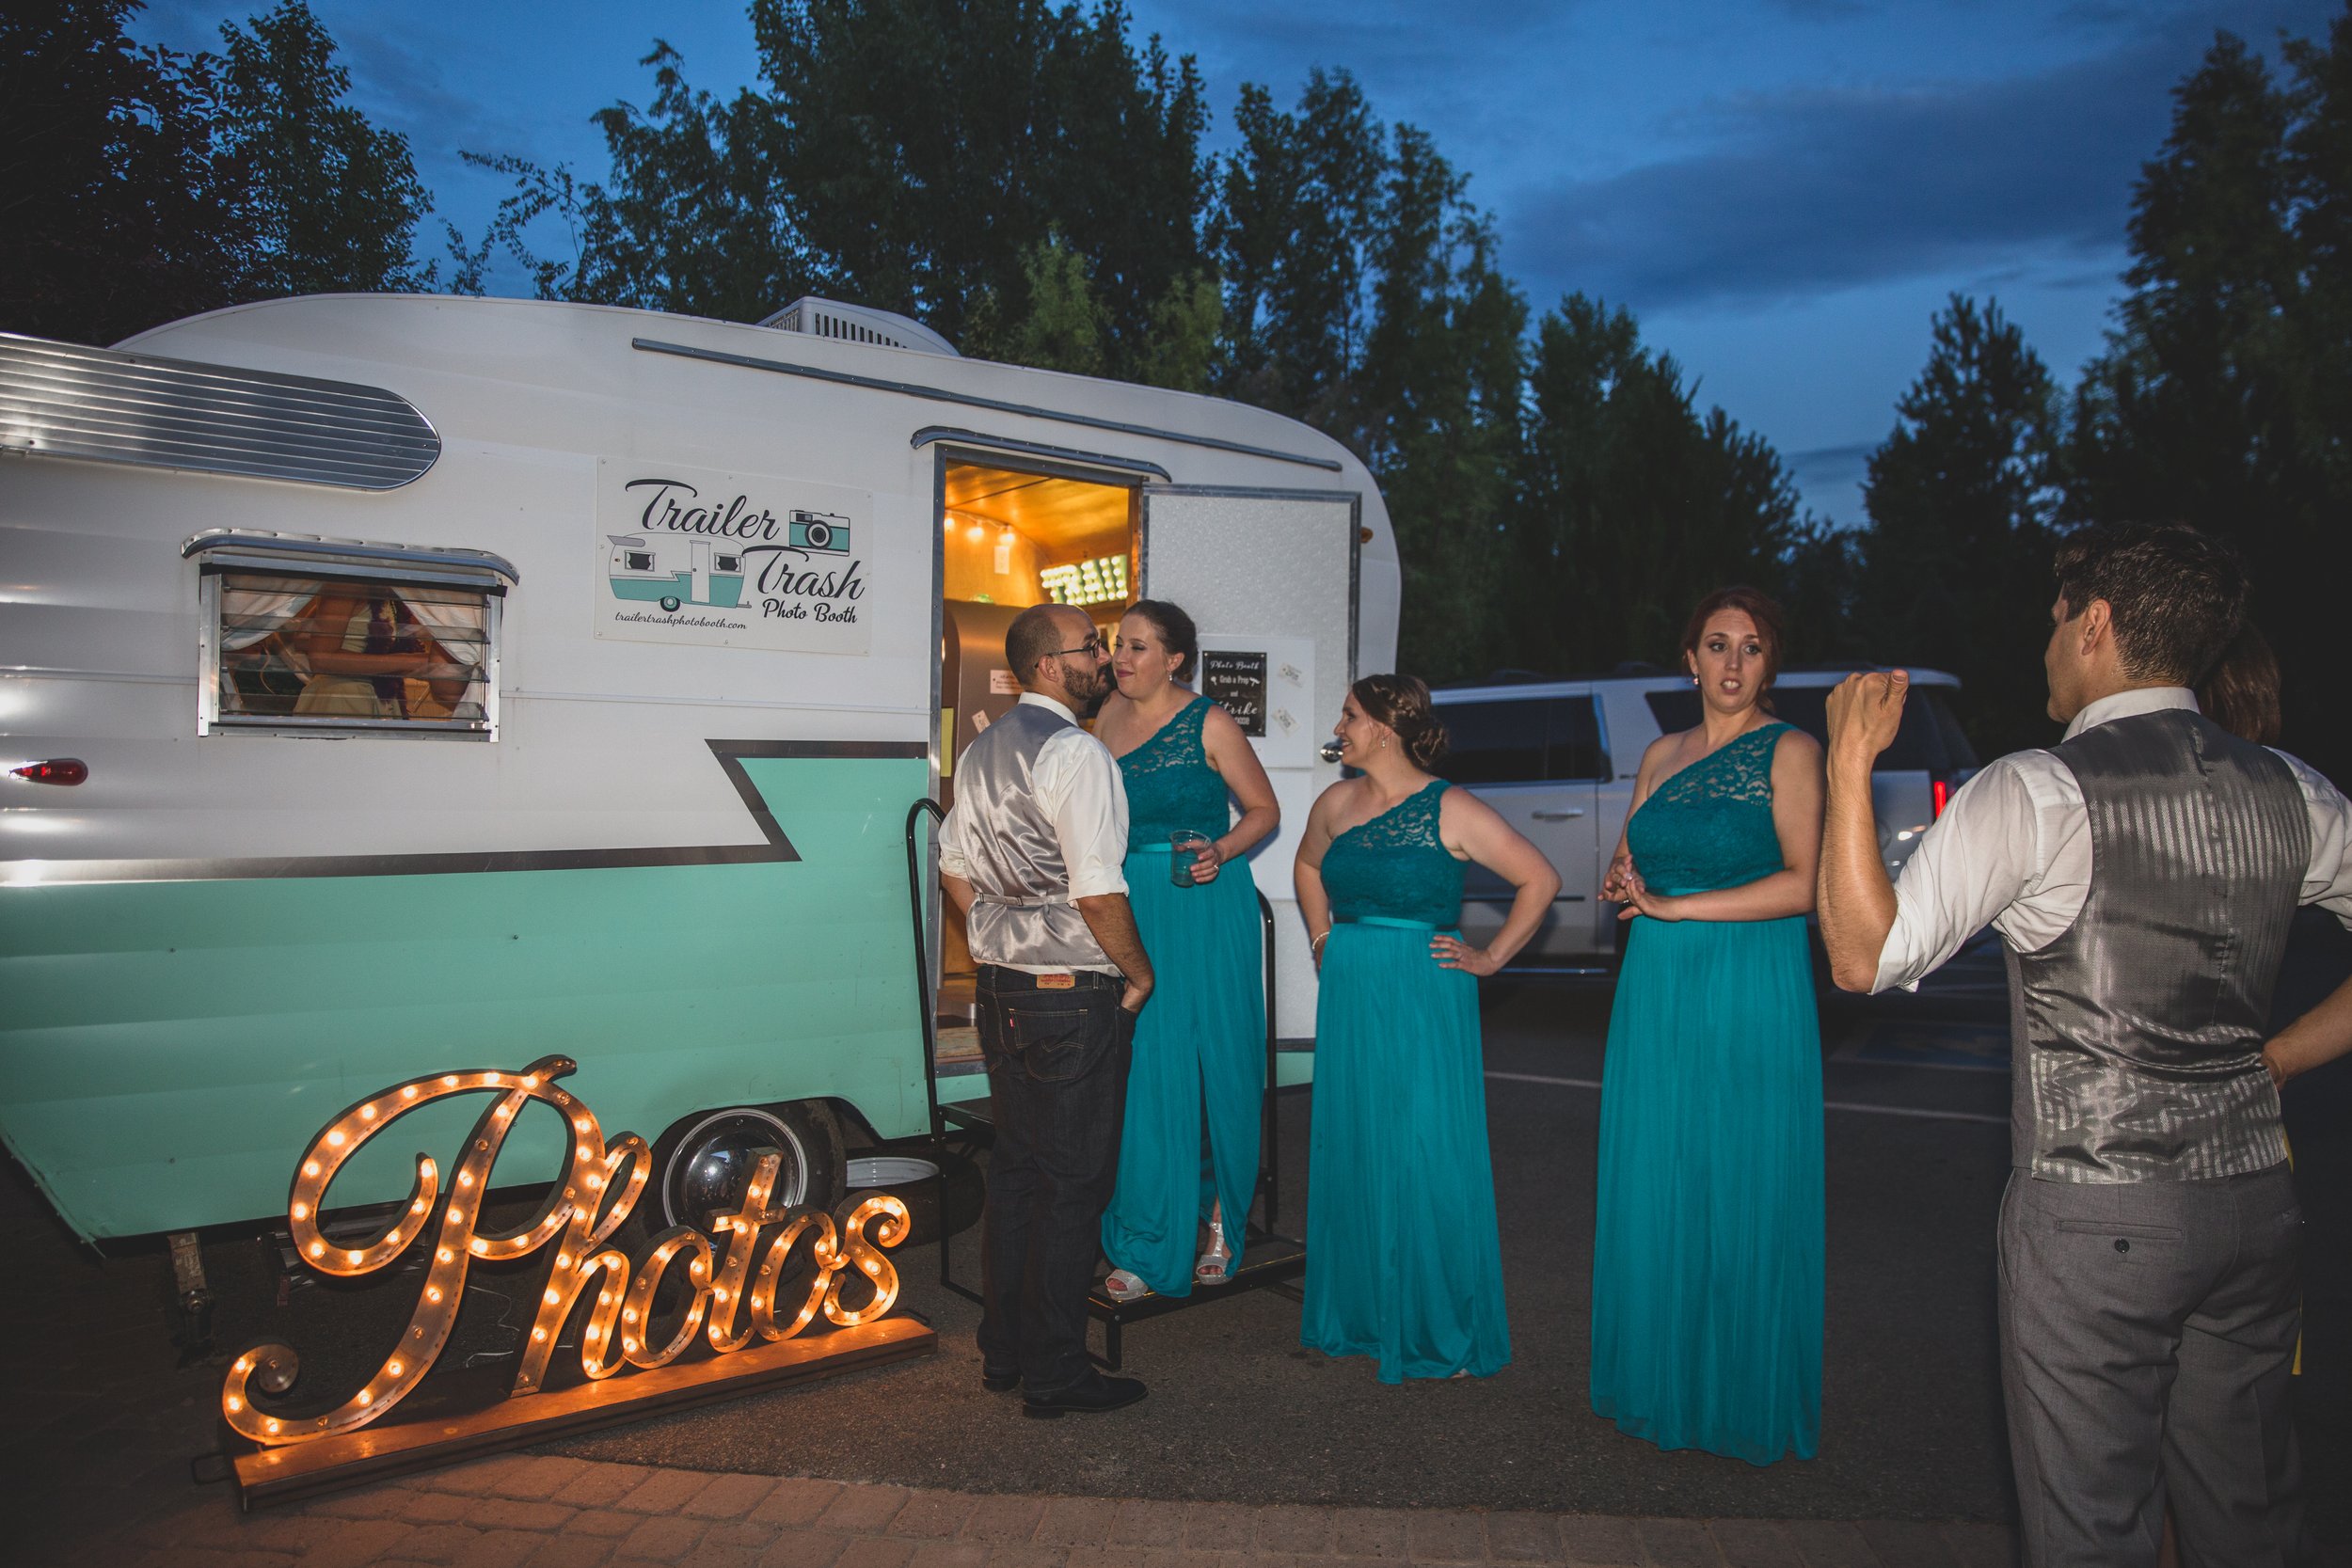  Photobooth at Brewery inspired Arizona wedding by Northern Arizona’s Best Wedding Photographer, Jennifer Lind Schutsky.  